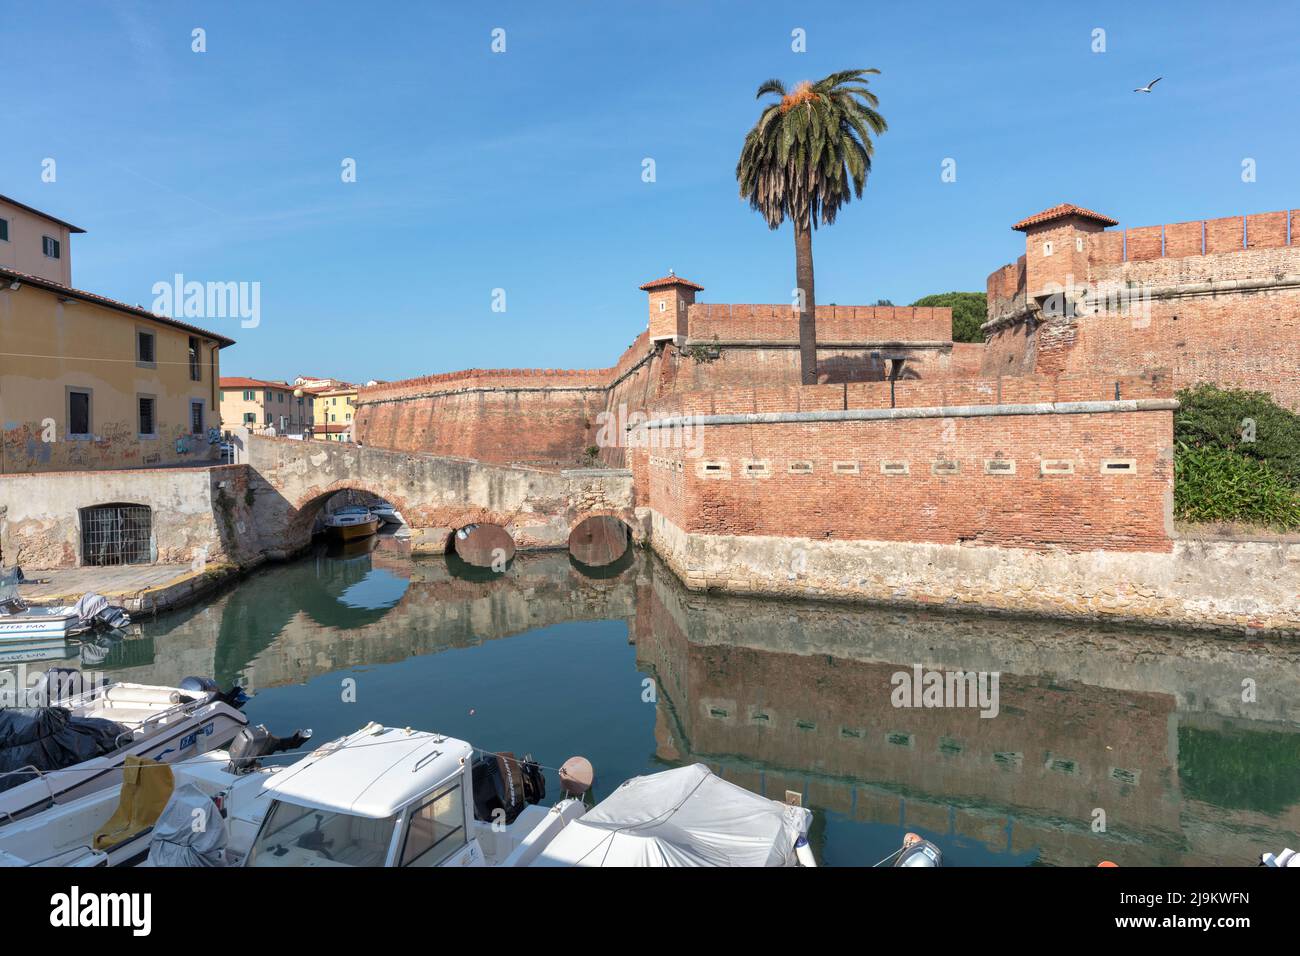 Fortezza Nuova, fortress completed in 1604, in Scali della Fortezza Nuova, surrounded by boats in historic canal, Livorno, Tuscany, Italy Stock Photo